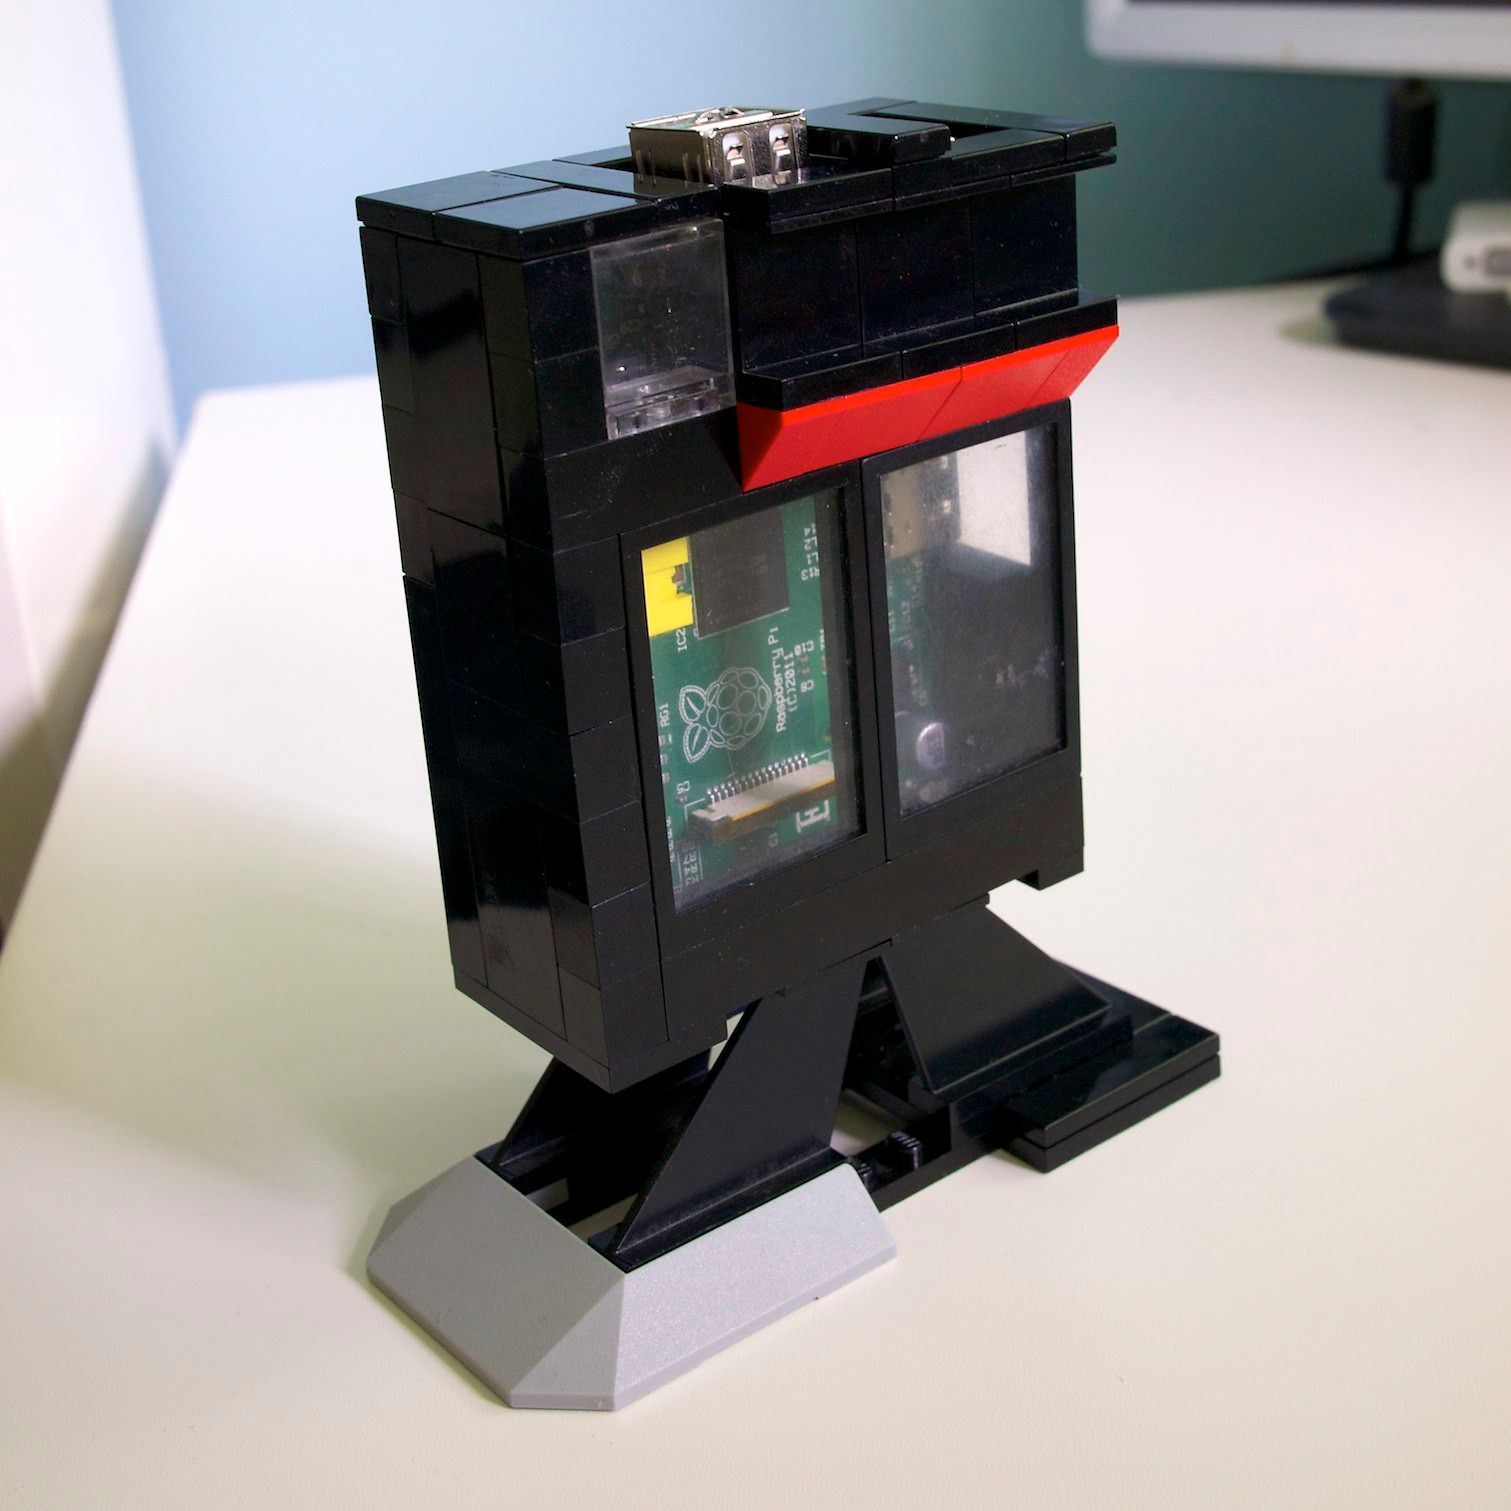 A LEGO Raspberry Pi Case